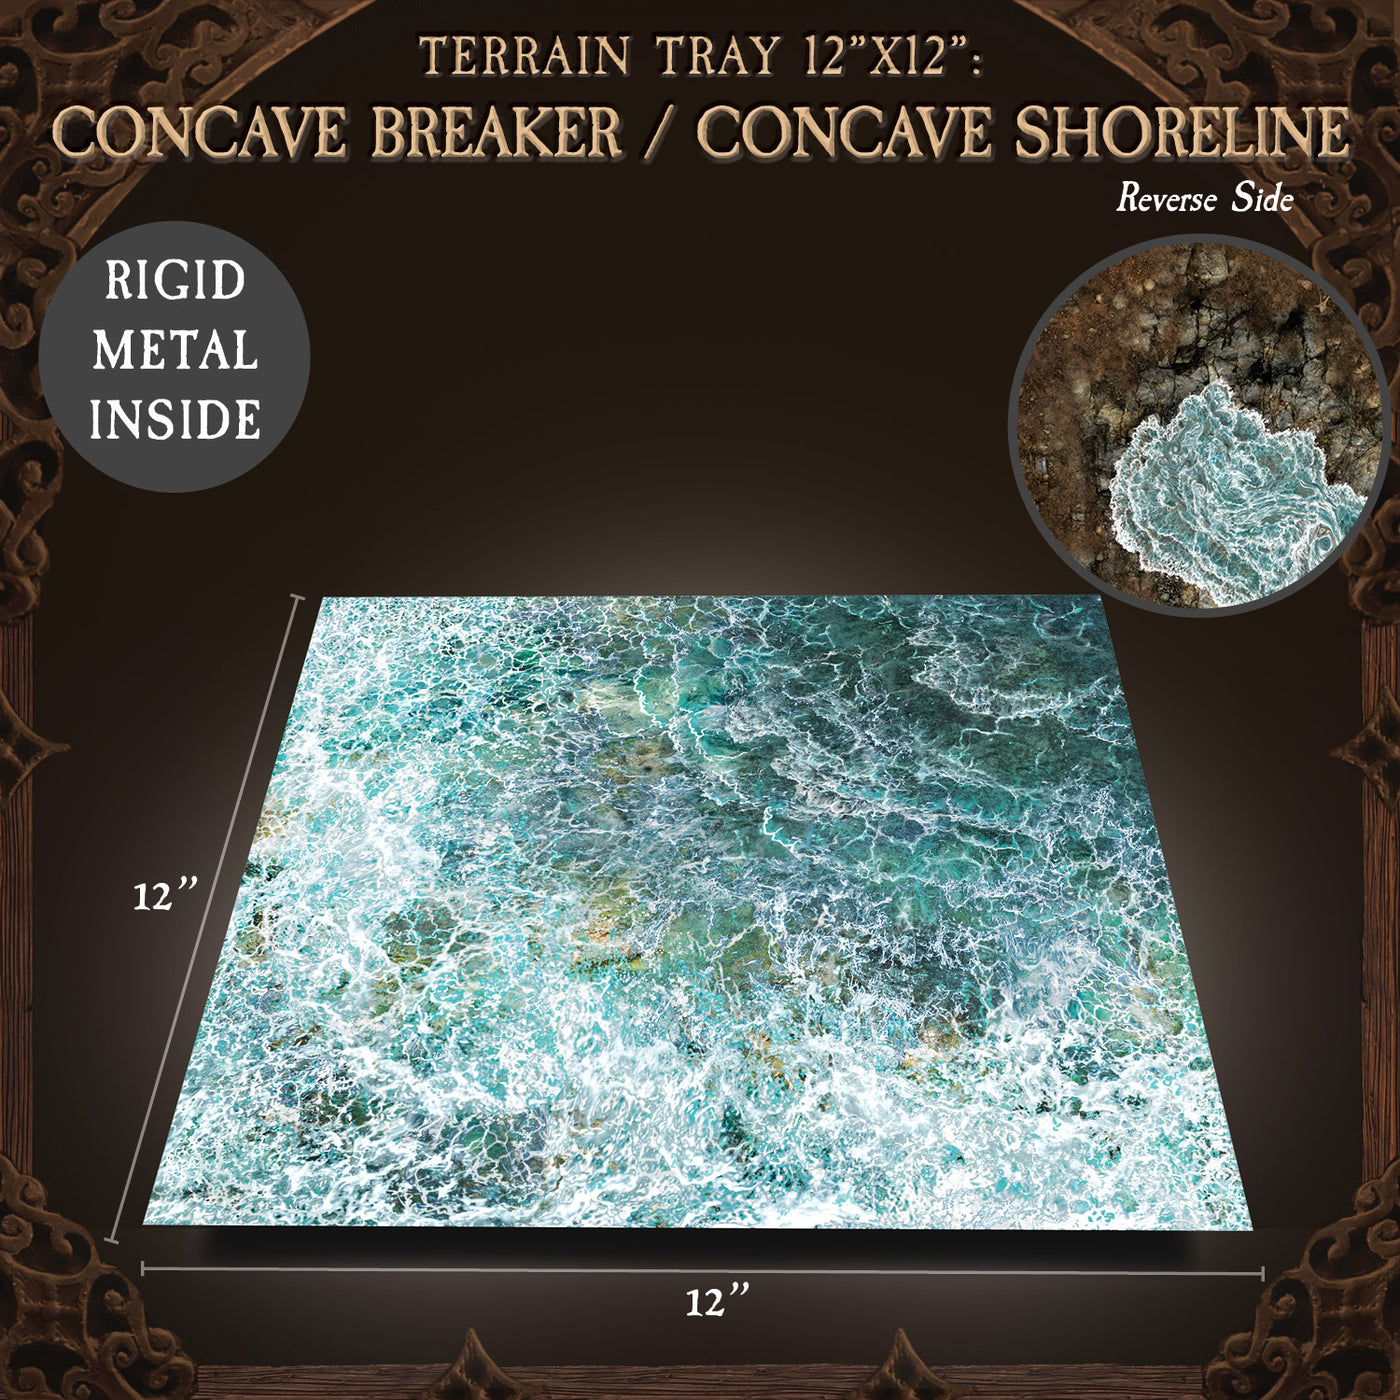 Terrain Tray Single 12"x12": Concave Breaker/Concave Shoreline